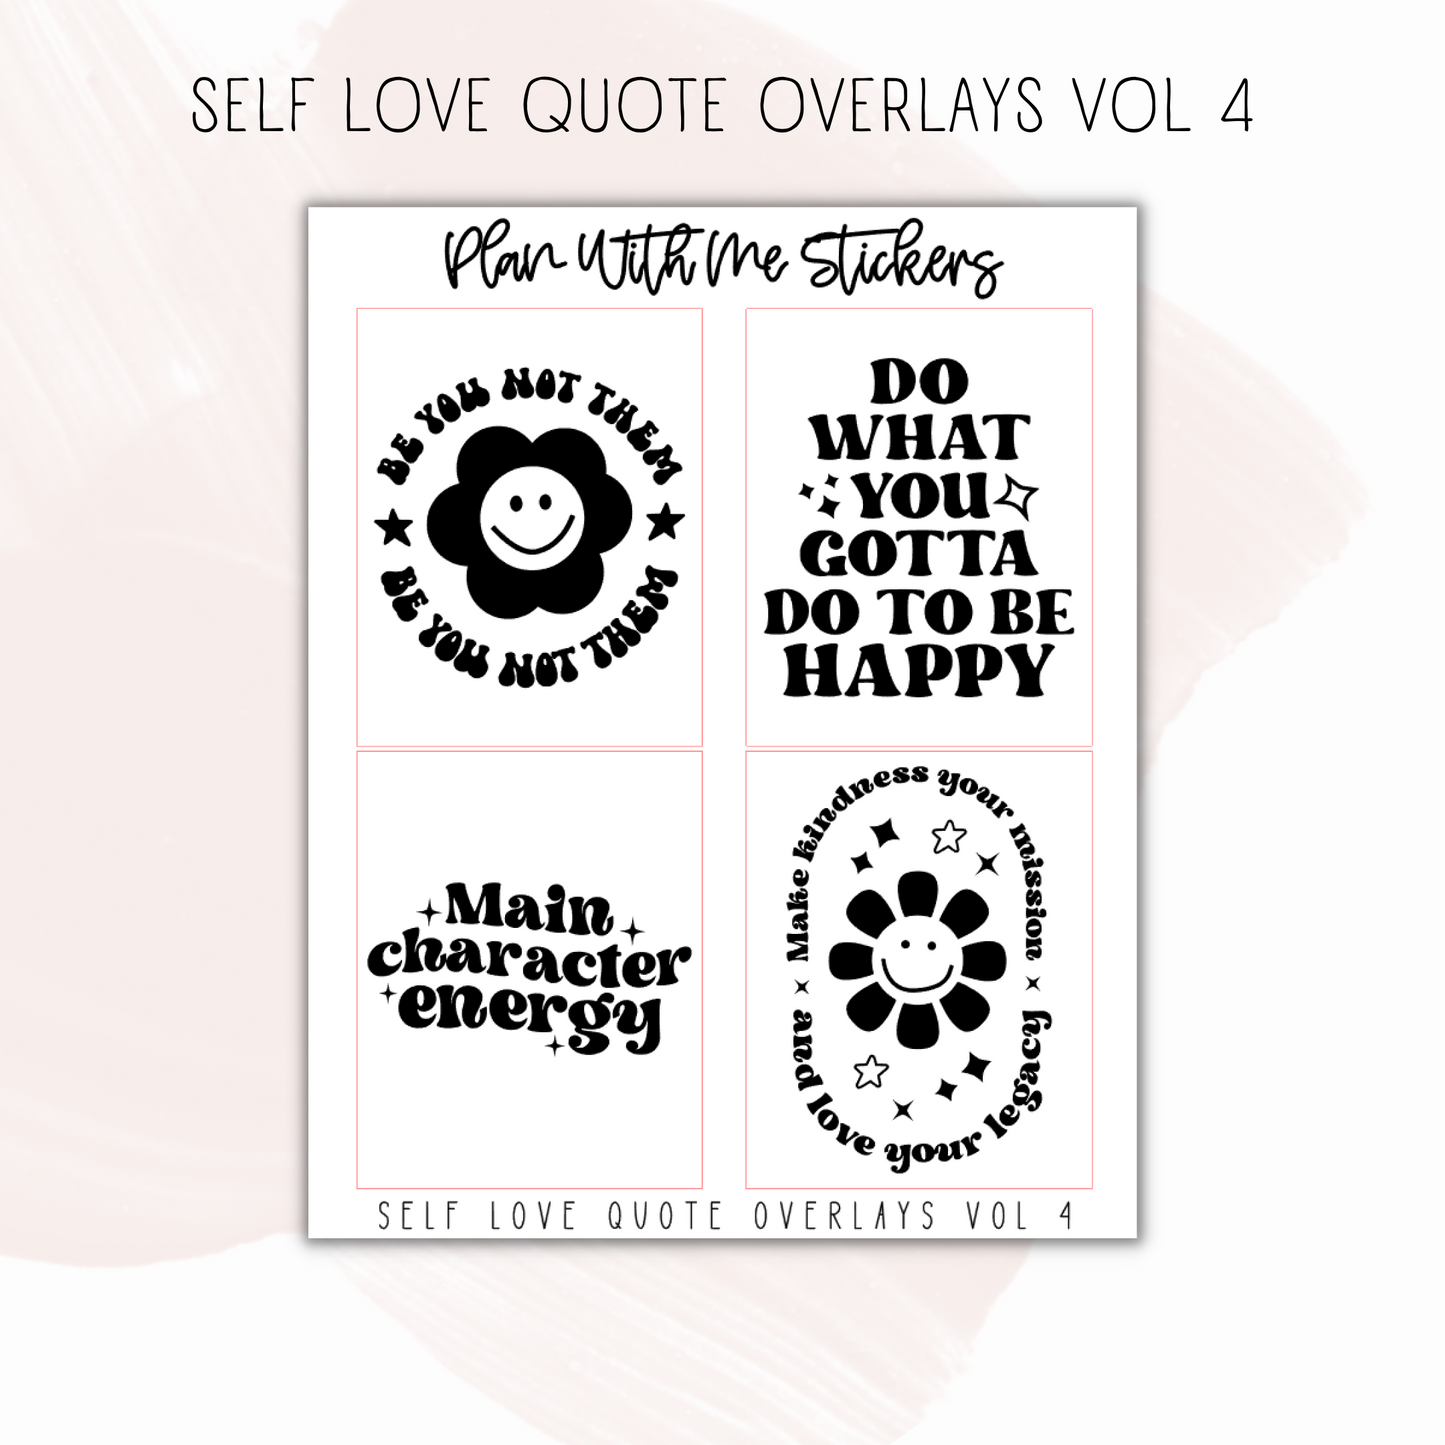 Self Love Quote Overlays Vol 4